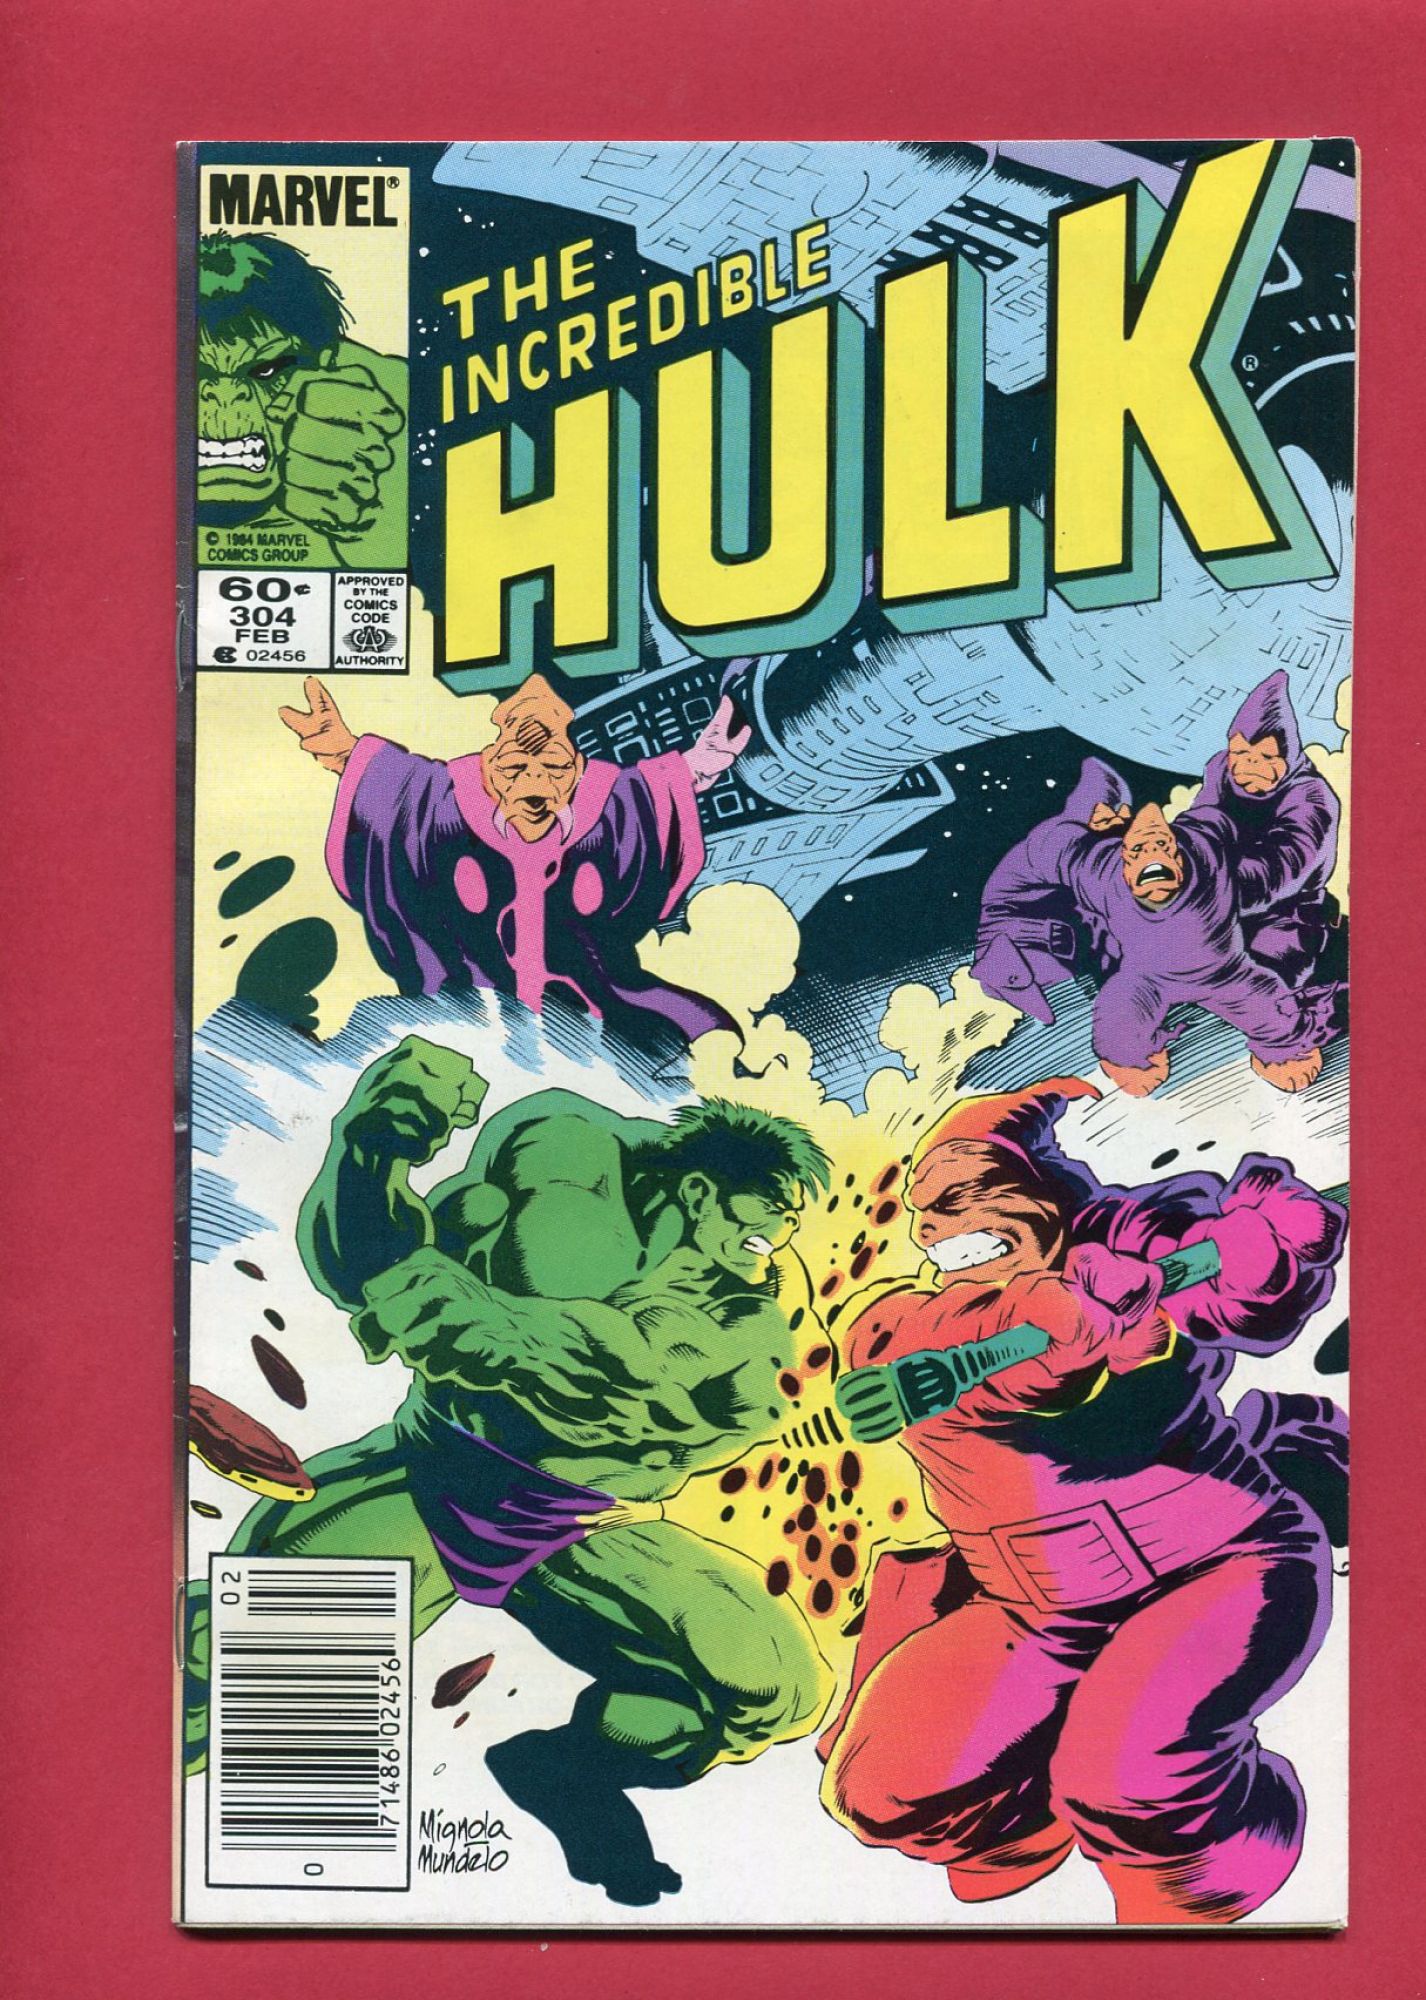 Incredible Hulk #304, Feb 1985, 7.0 FN/VF